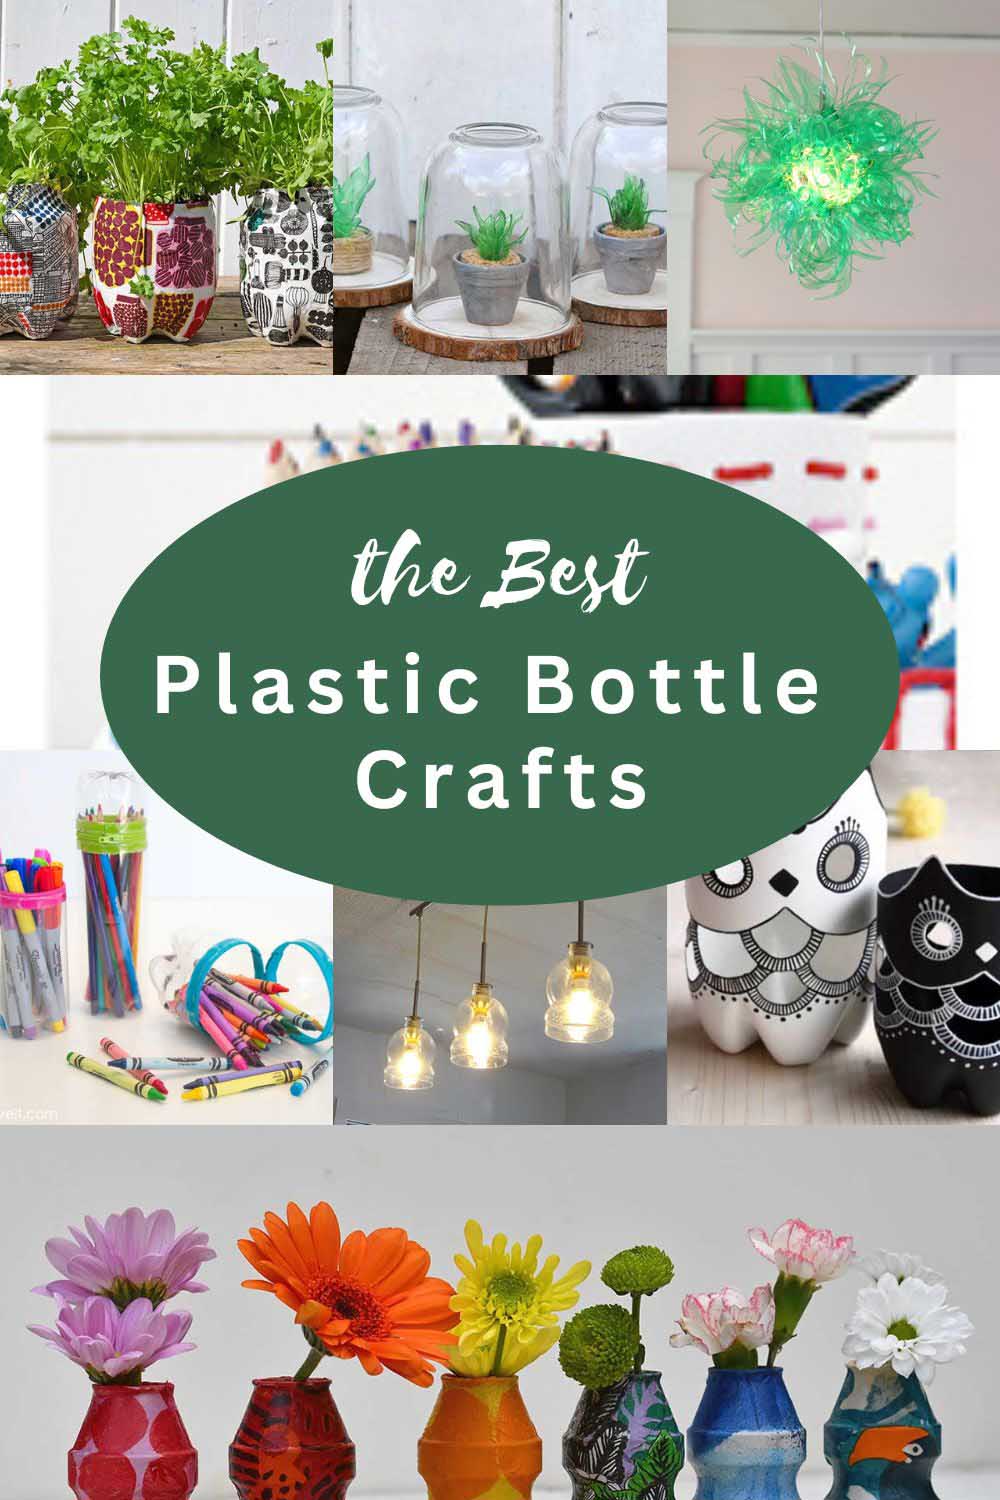 The best plastic bottle crafts